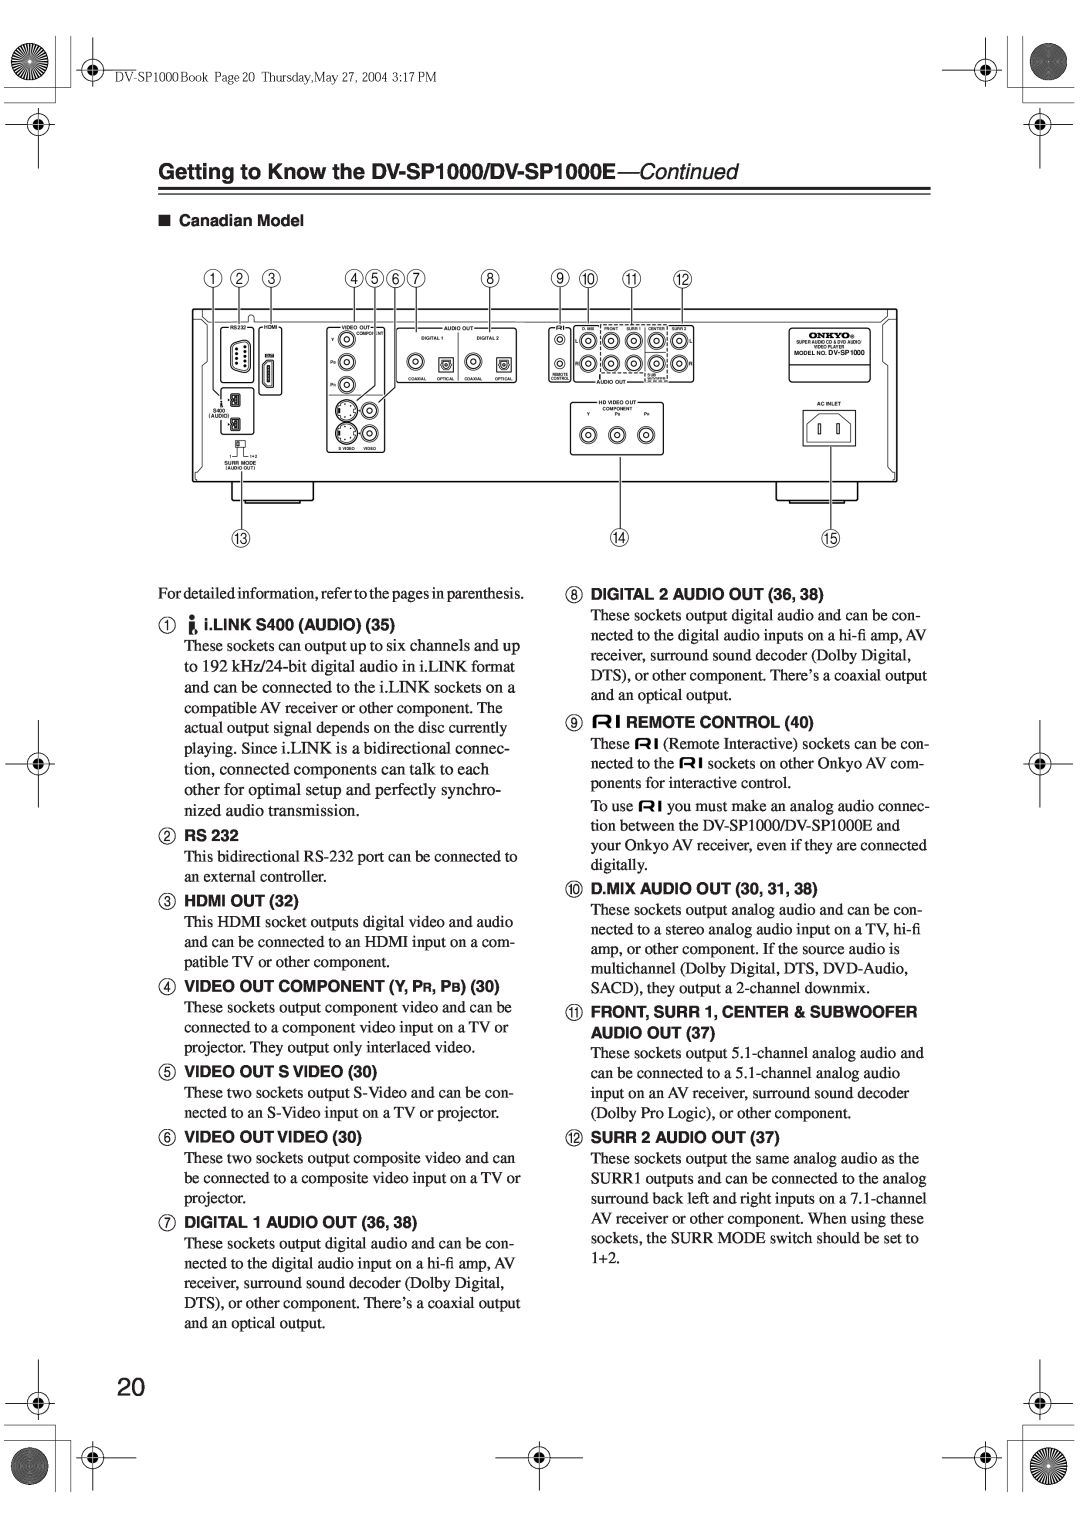 Onkyo DV-SP1000E instruction manual 4567 8 9 J K L, Mn O 